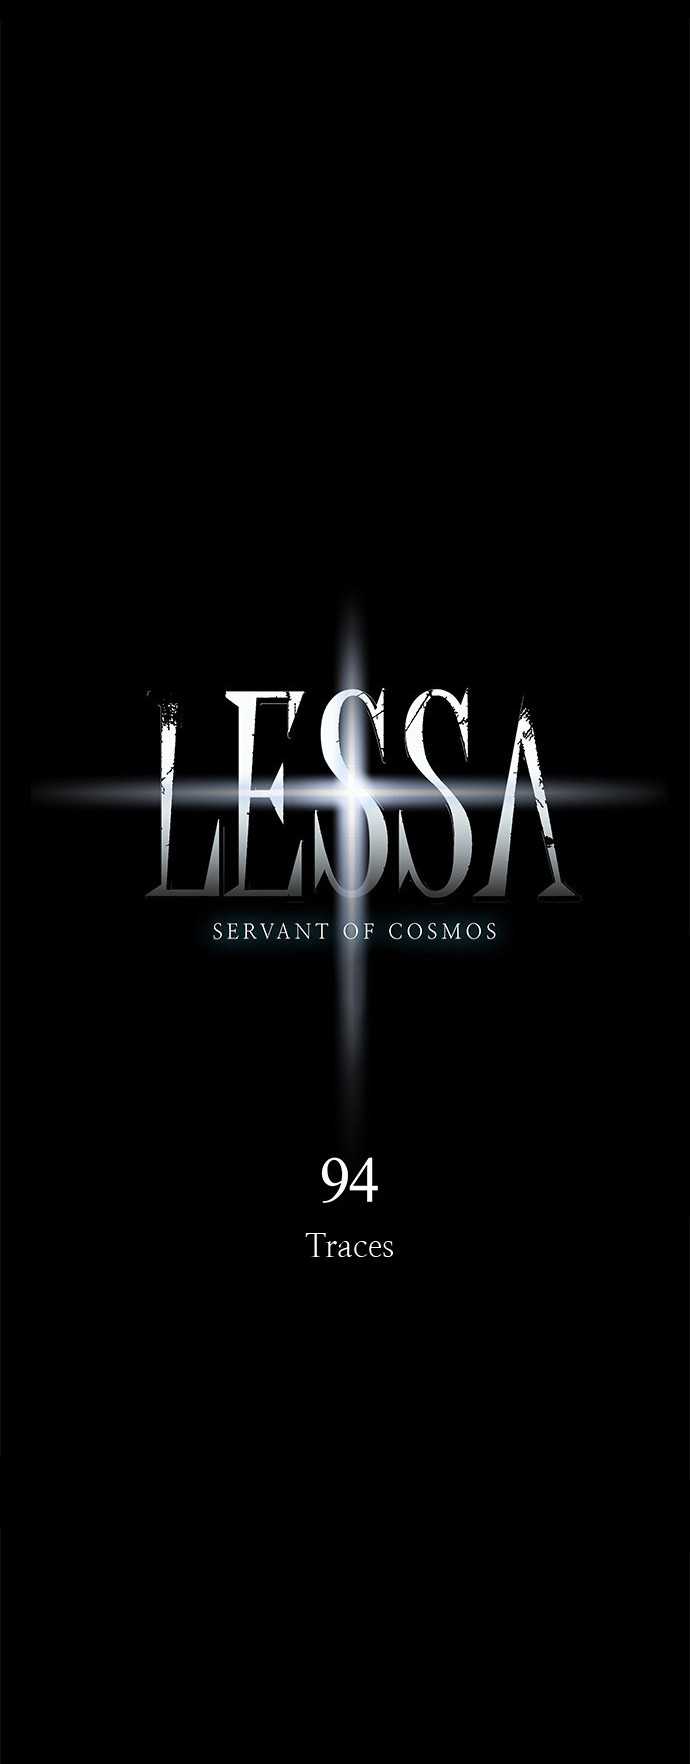 LESSA – Servant of Cosmos Chapter 94